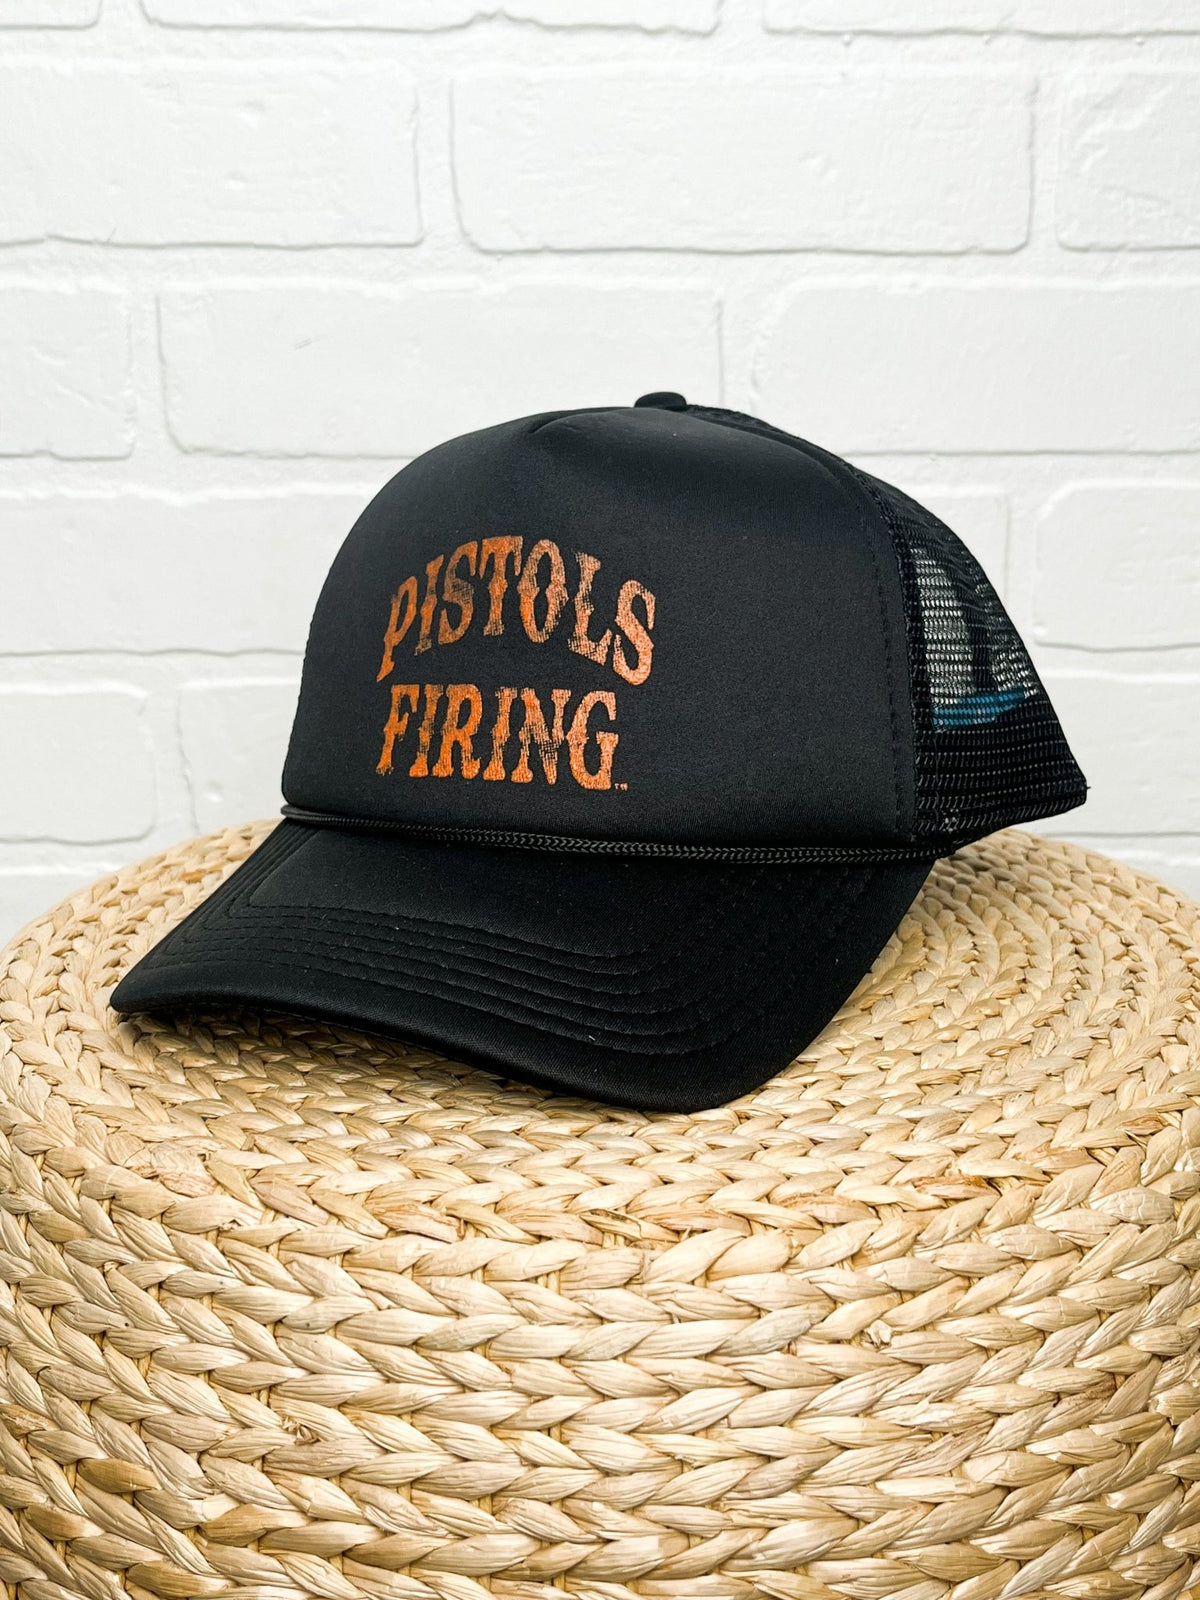 OSU OSU Pistols Firing trucker hat black Hats Black | Lush Fashion Lounge Trendy Oklahoma State Cowboys Apparel & Cute Gameday T-Shirts